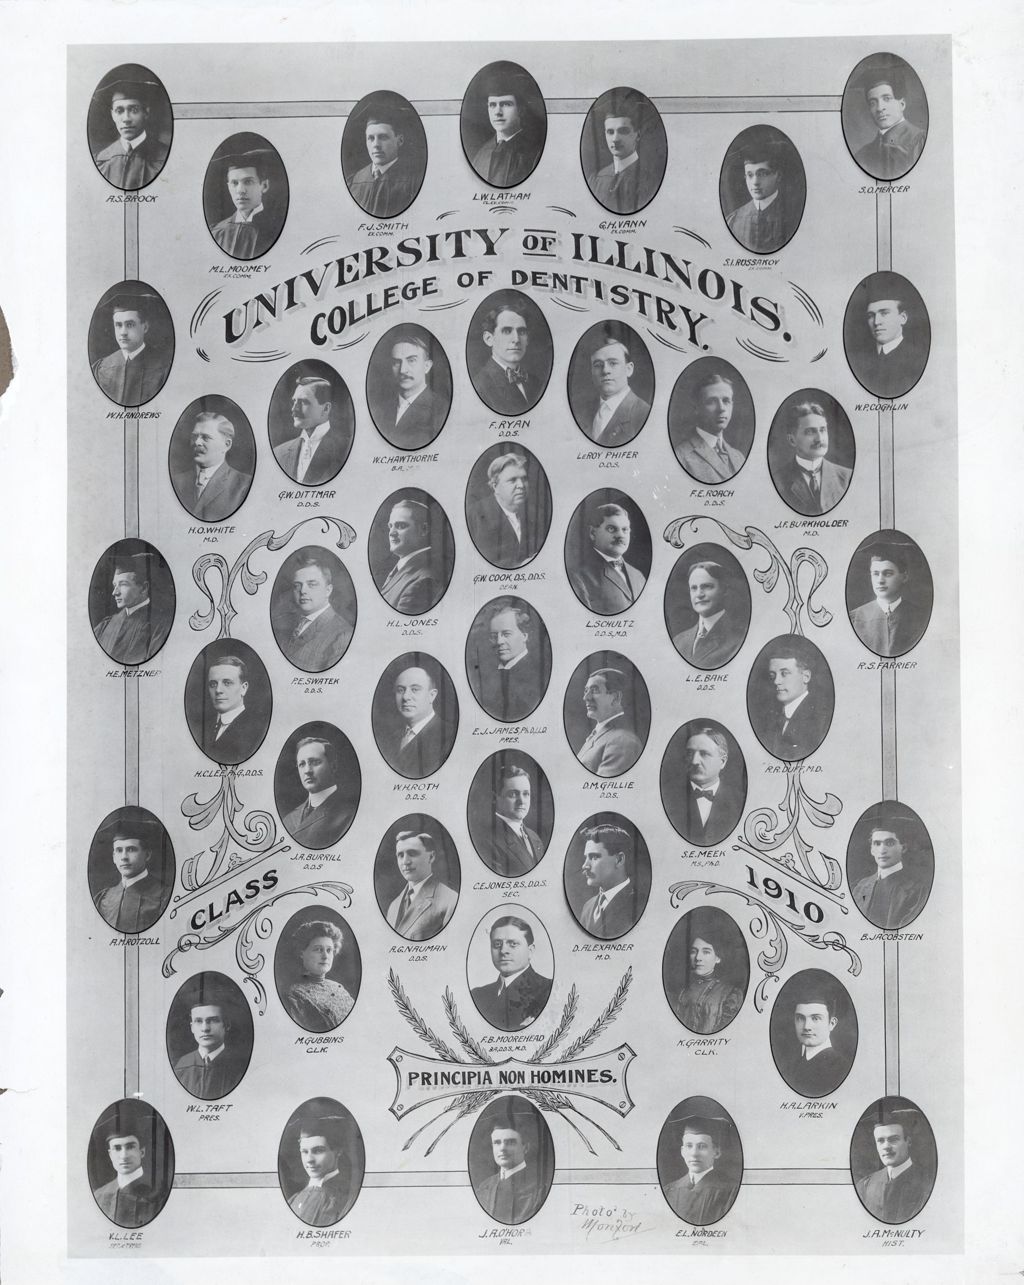 Miniature of 1910 graduating class, University of Illinois College of Dentistry